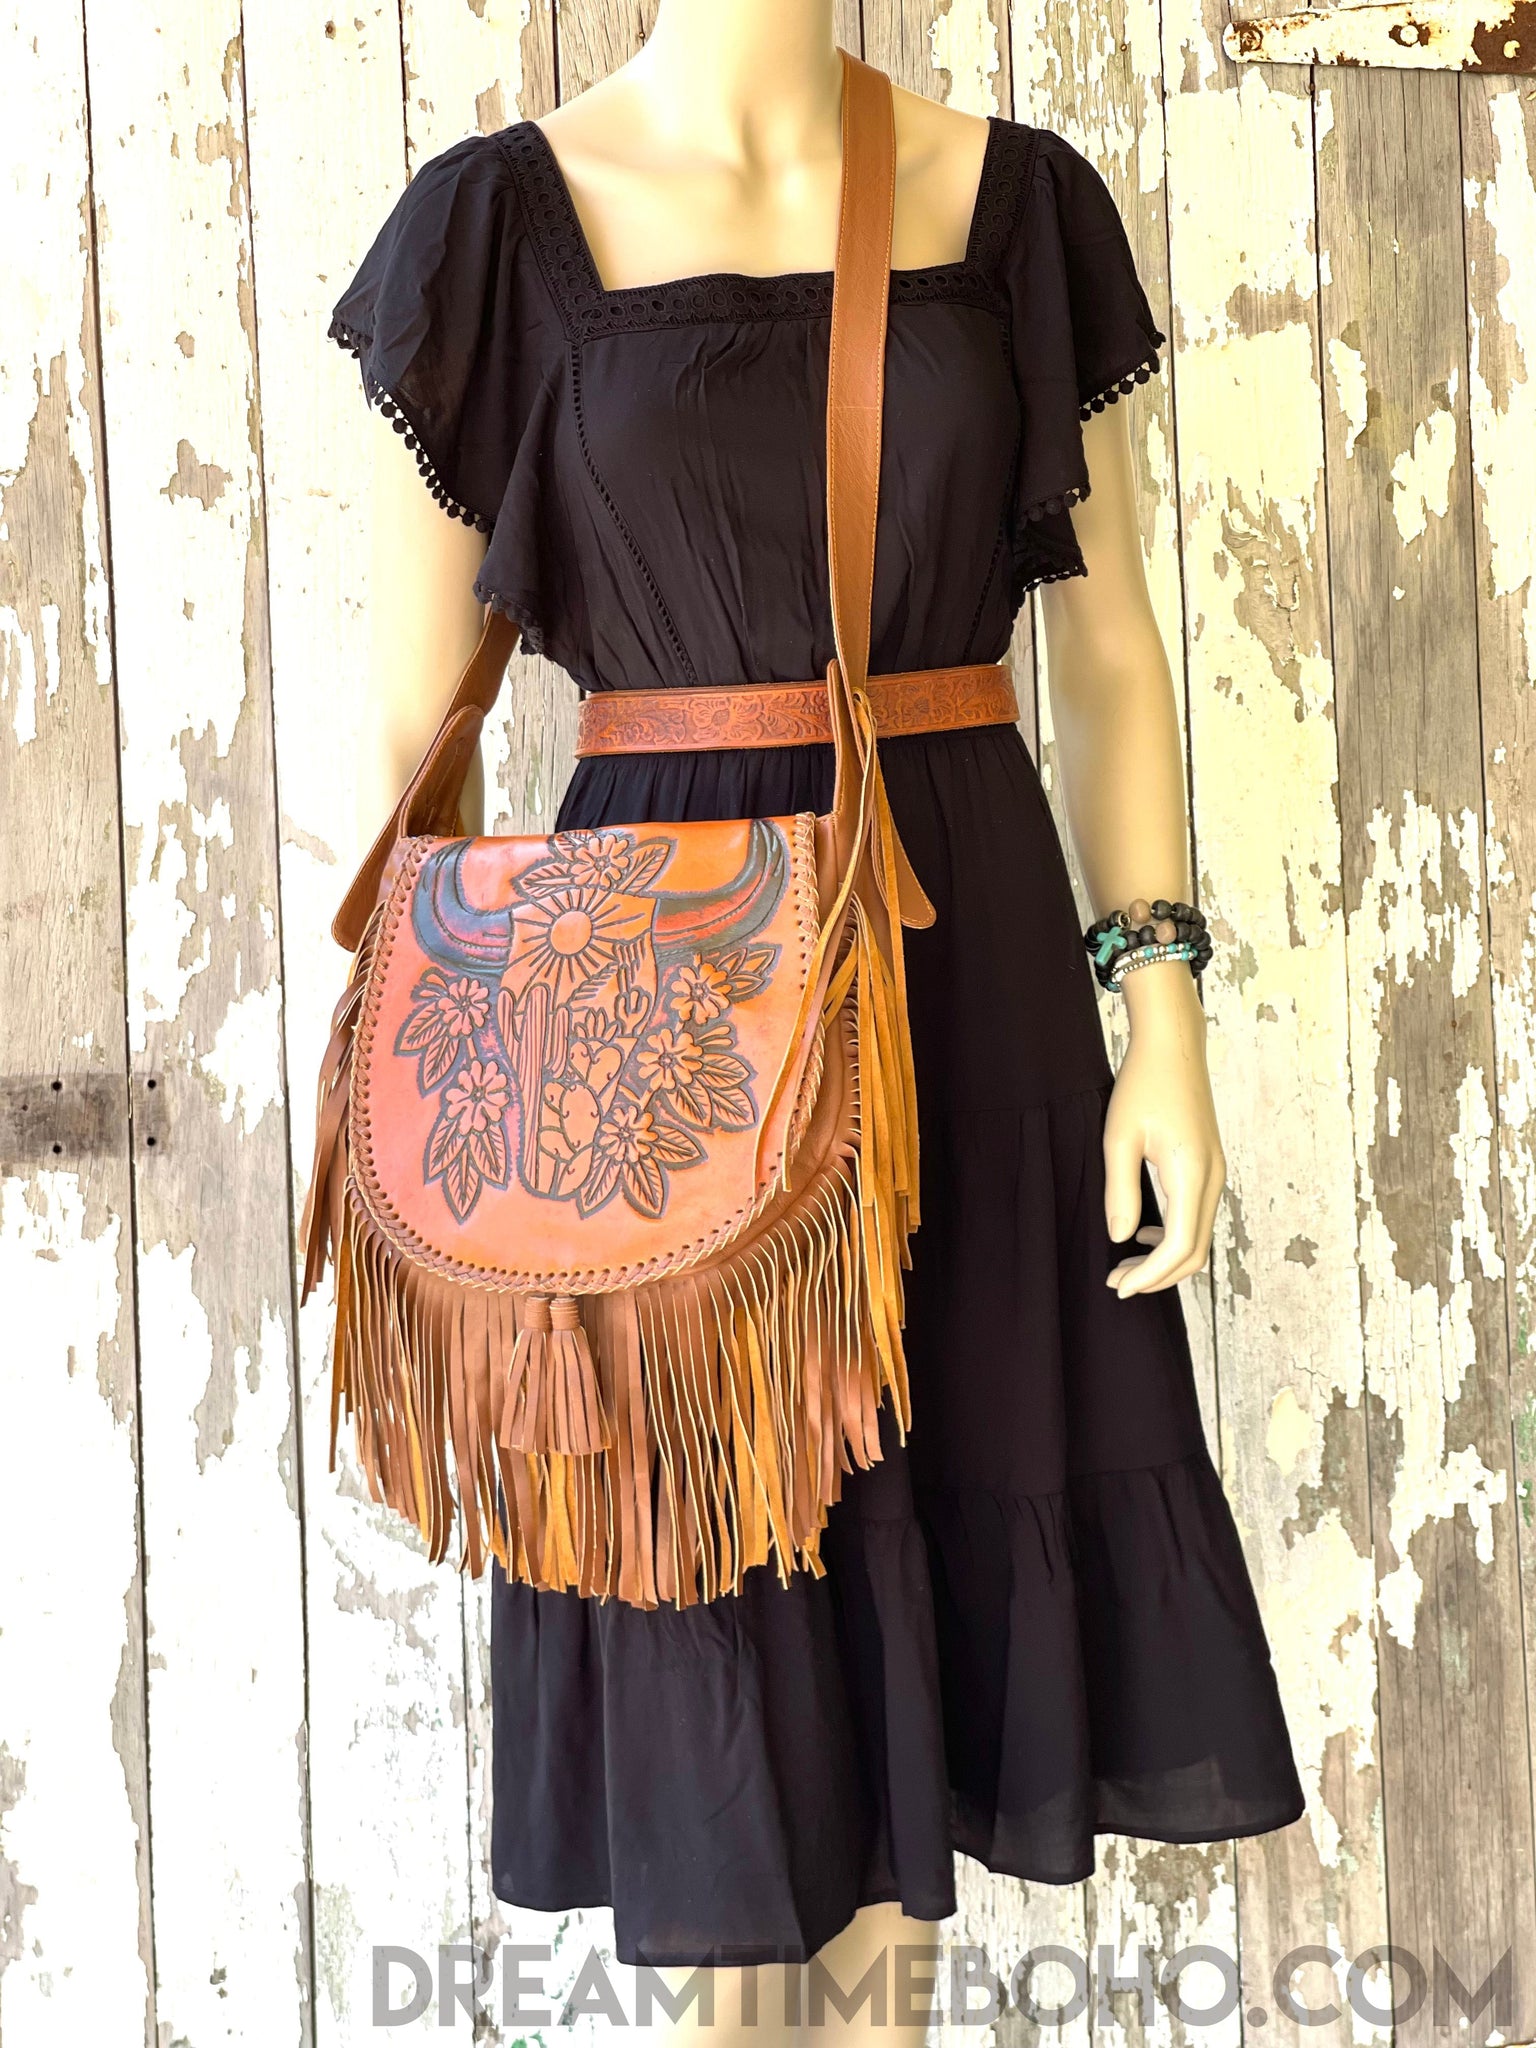 Authentic Boho Rag Rug Bag Handmade Vintage Gypsy Purse Cross Body